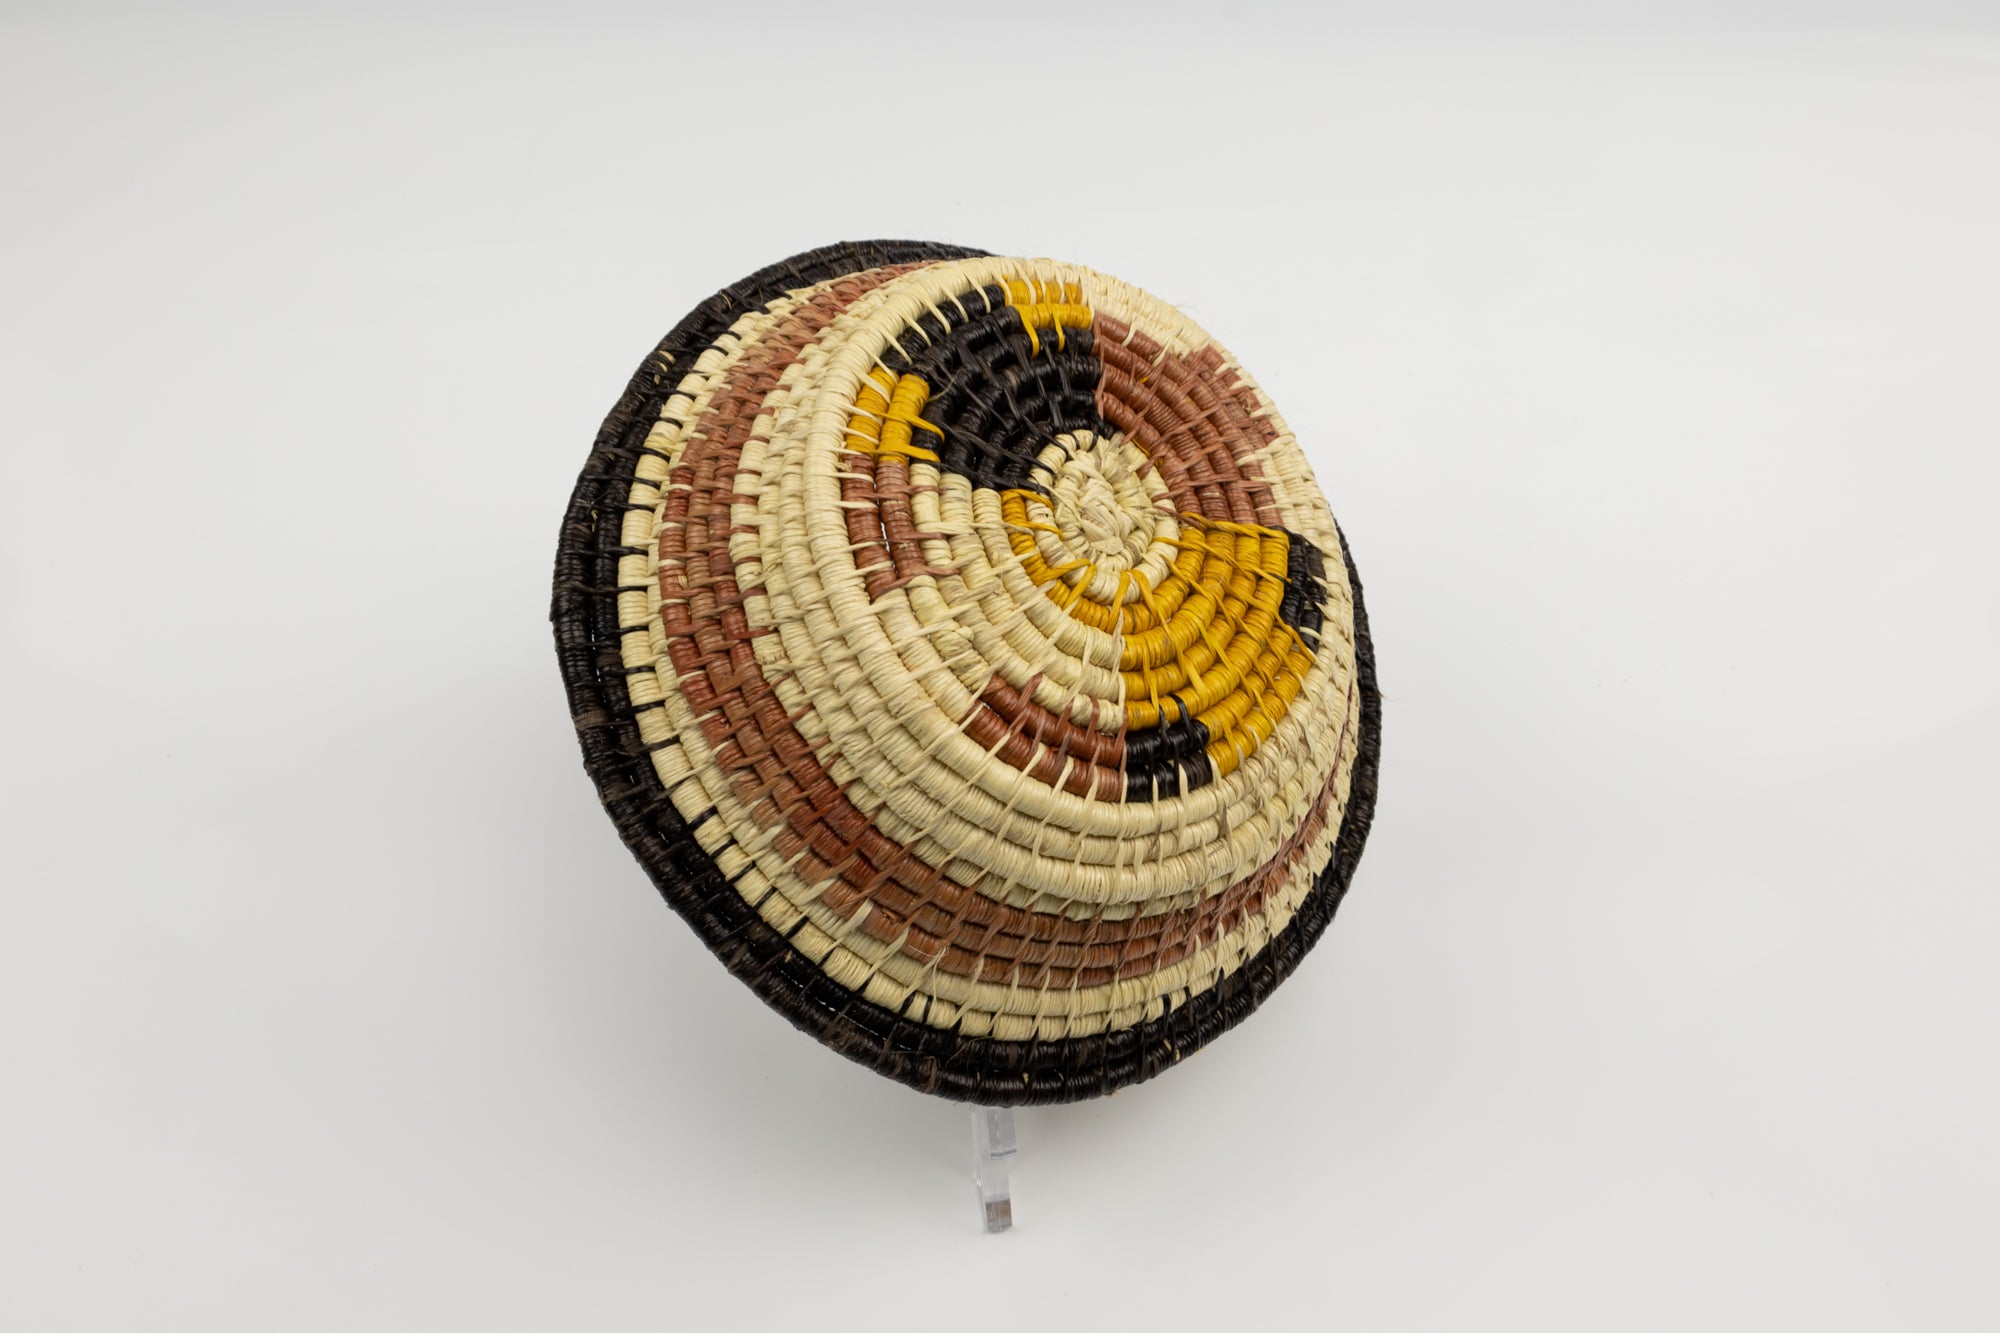 Vintage Handmade Basket Woven Bowl Fair Trade